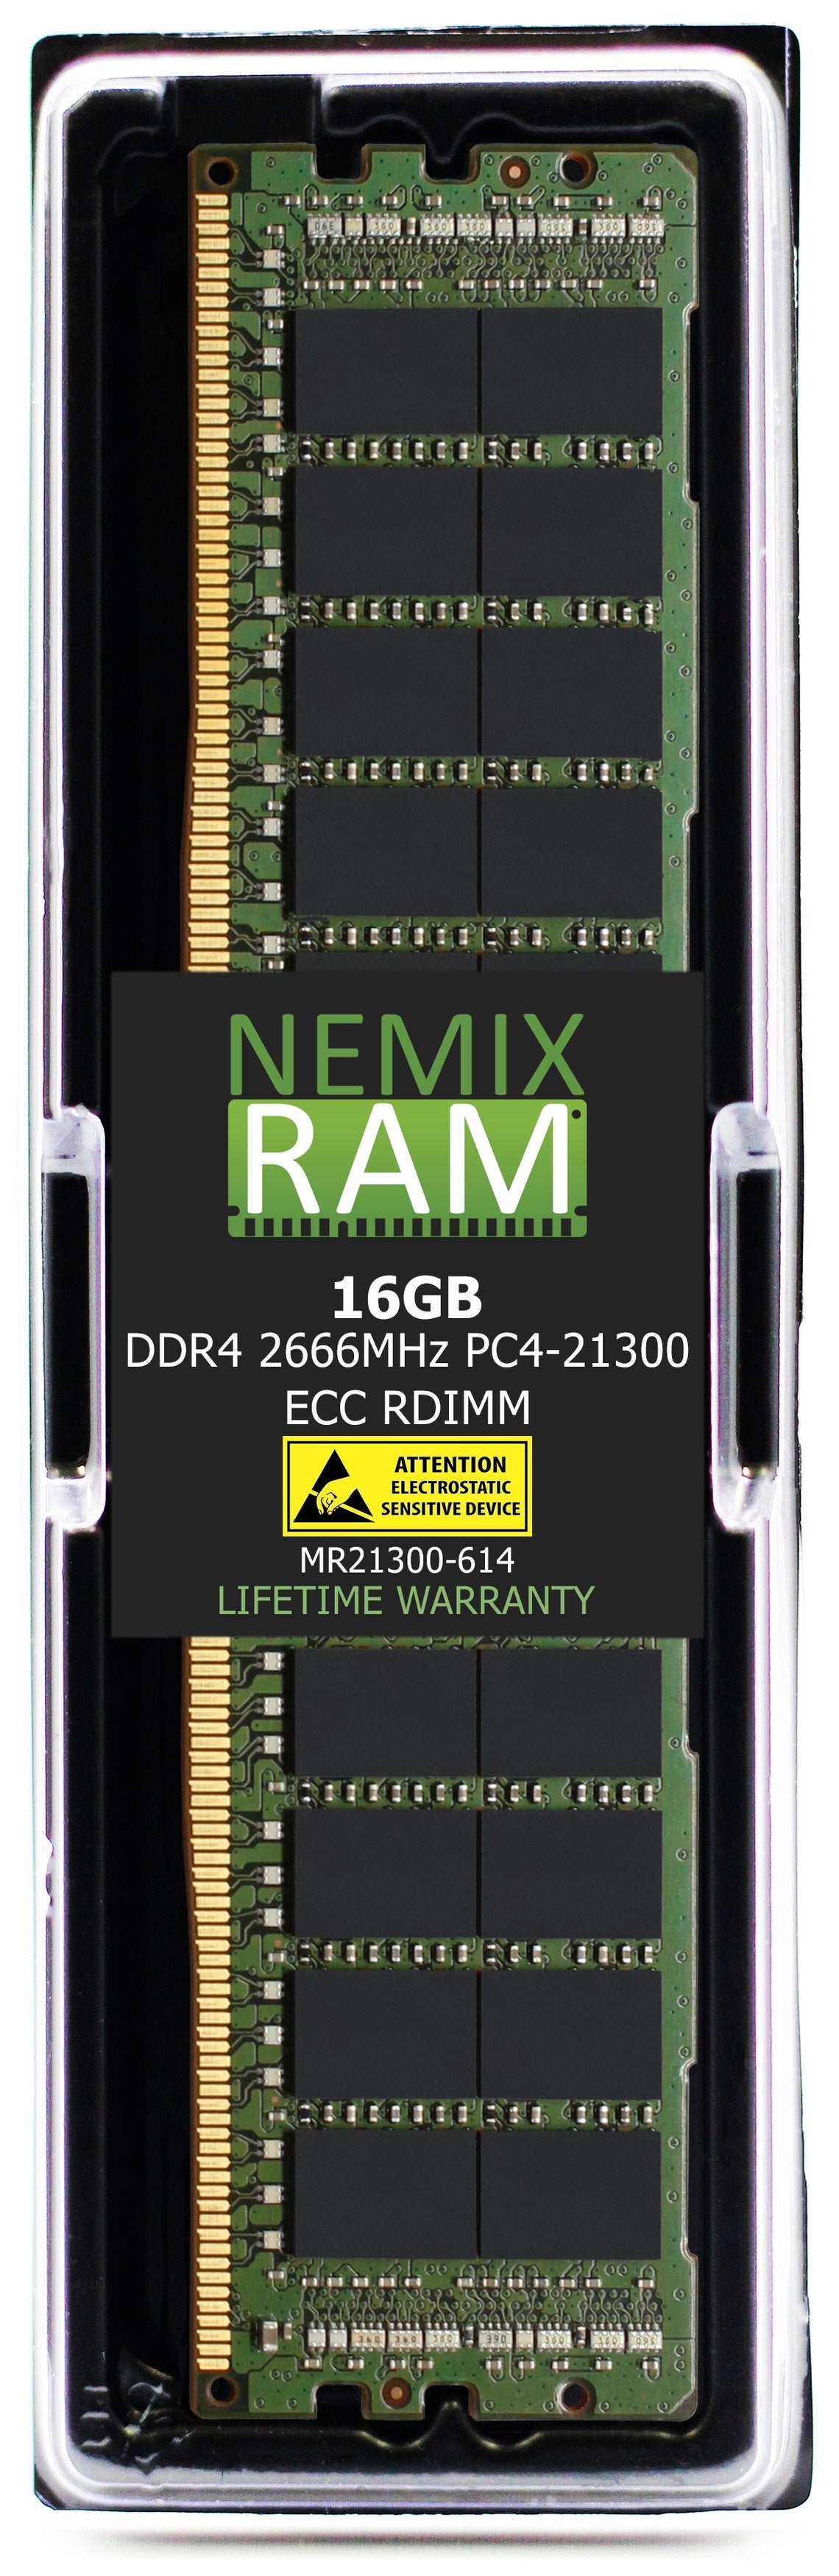 NEC Express5800 T120h Memory Module N8102-709 16GB DDR4 2666MHZ PC4-21300 RDIMM